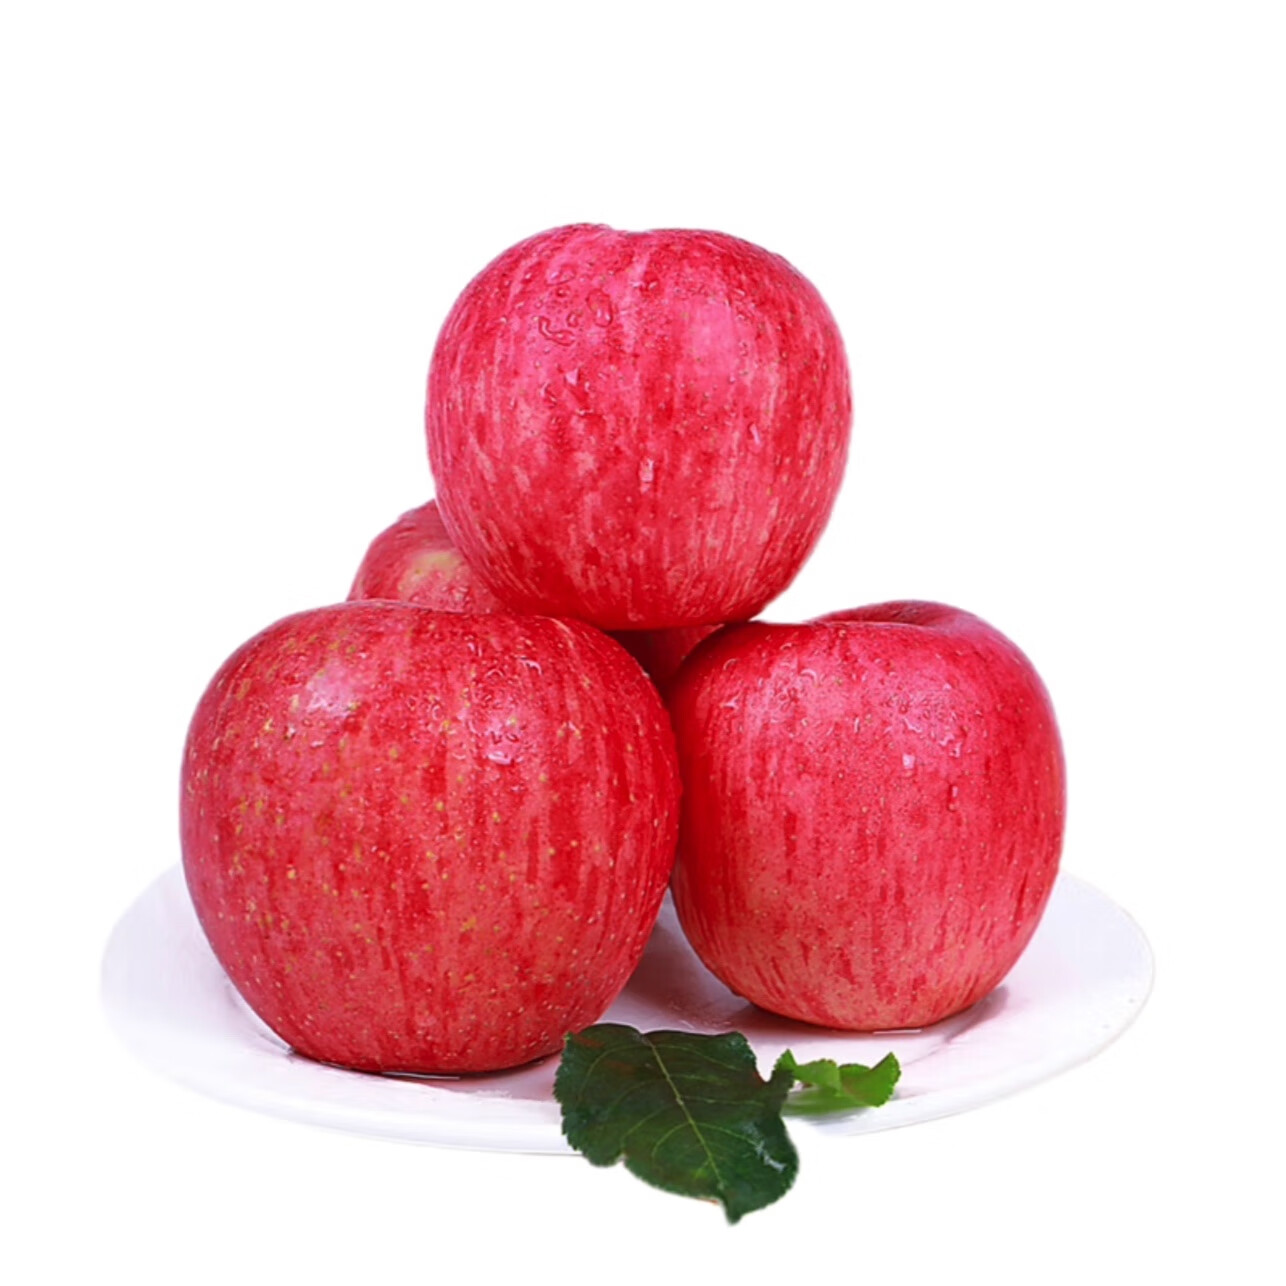 LUOCHUAN APPLE 洛川苹果 红富士 陕西正宗脆甜产地直发新鲜水果礼盒 净重4.2斤80± 29.9元